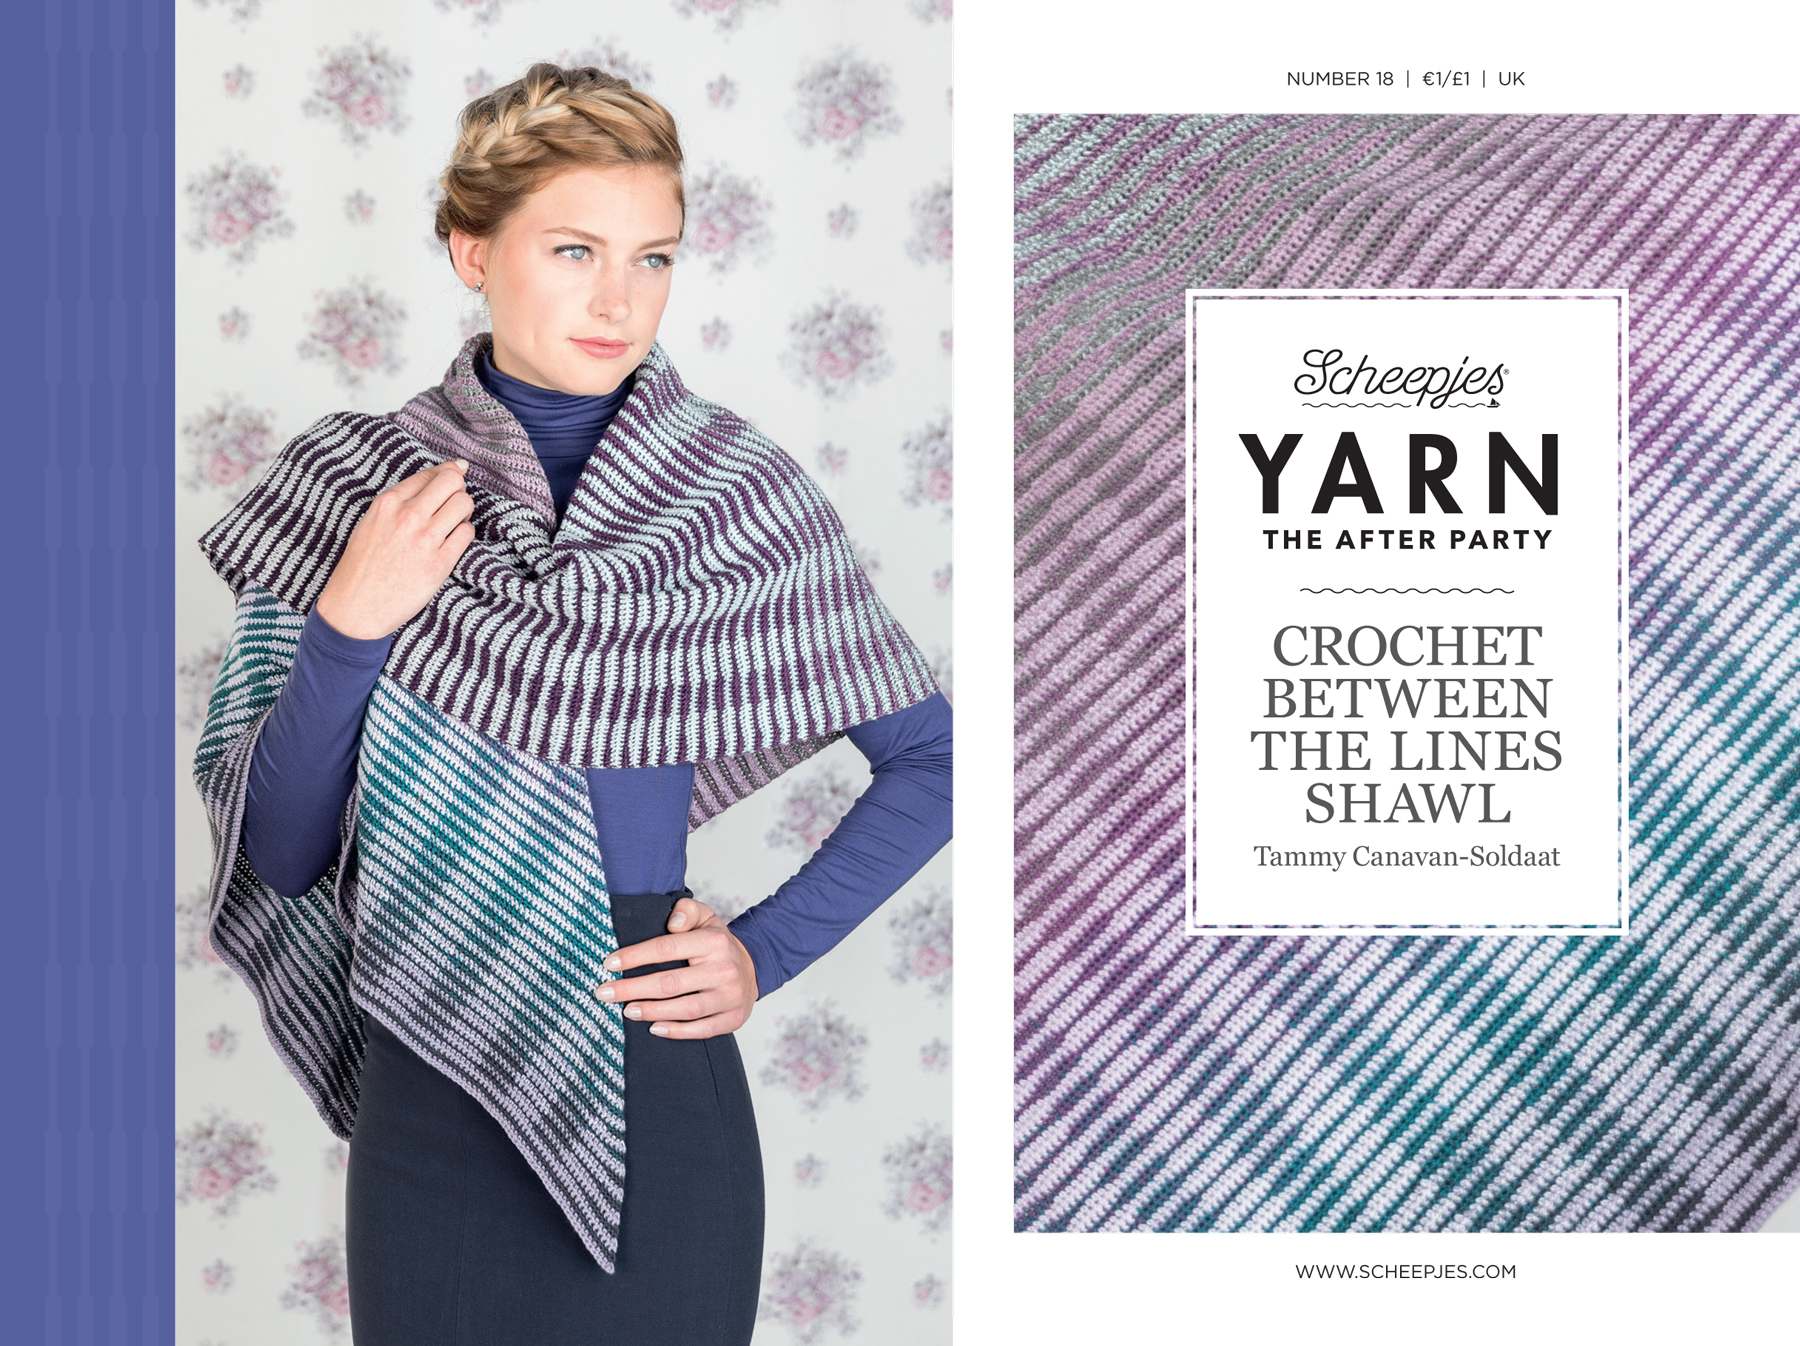 Nr 18 Crochet between the lines shawl